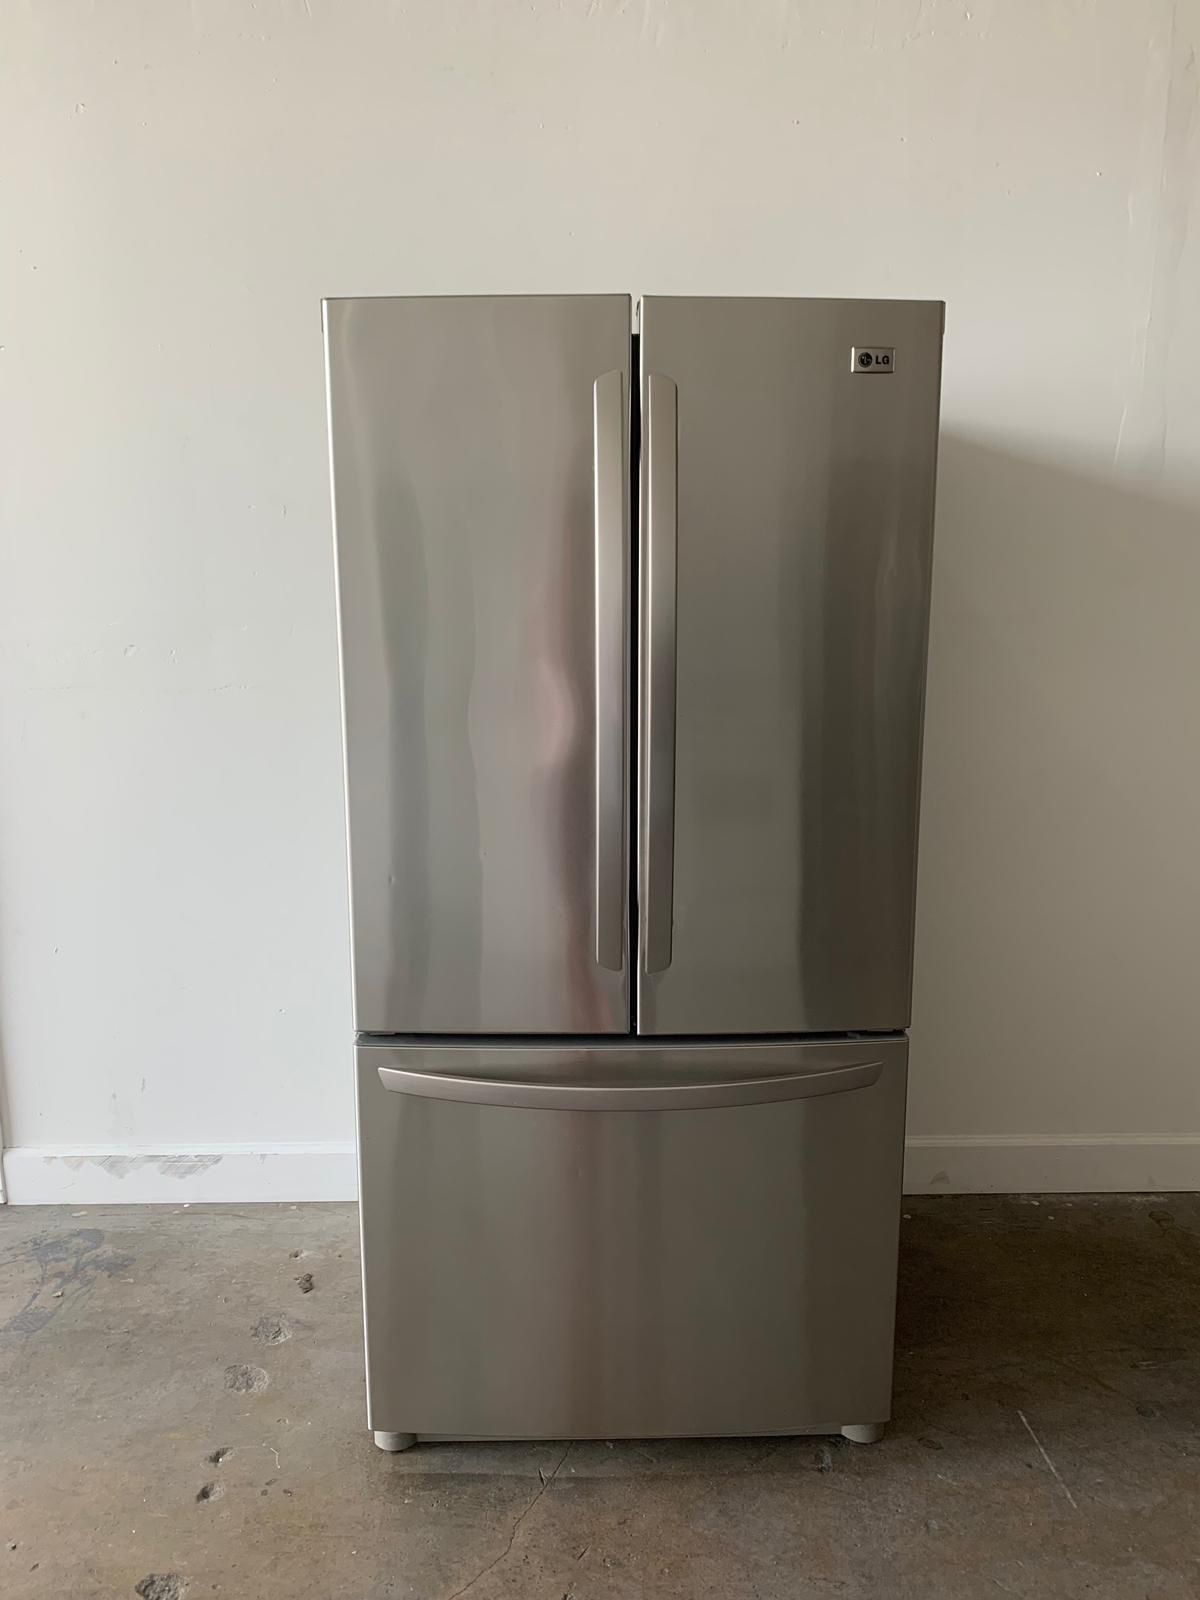 LG Fridge Nevera Refrigerador Refrigerator French Door stainless steel.33” good condition... we deliver... 90 days warranty